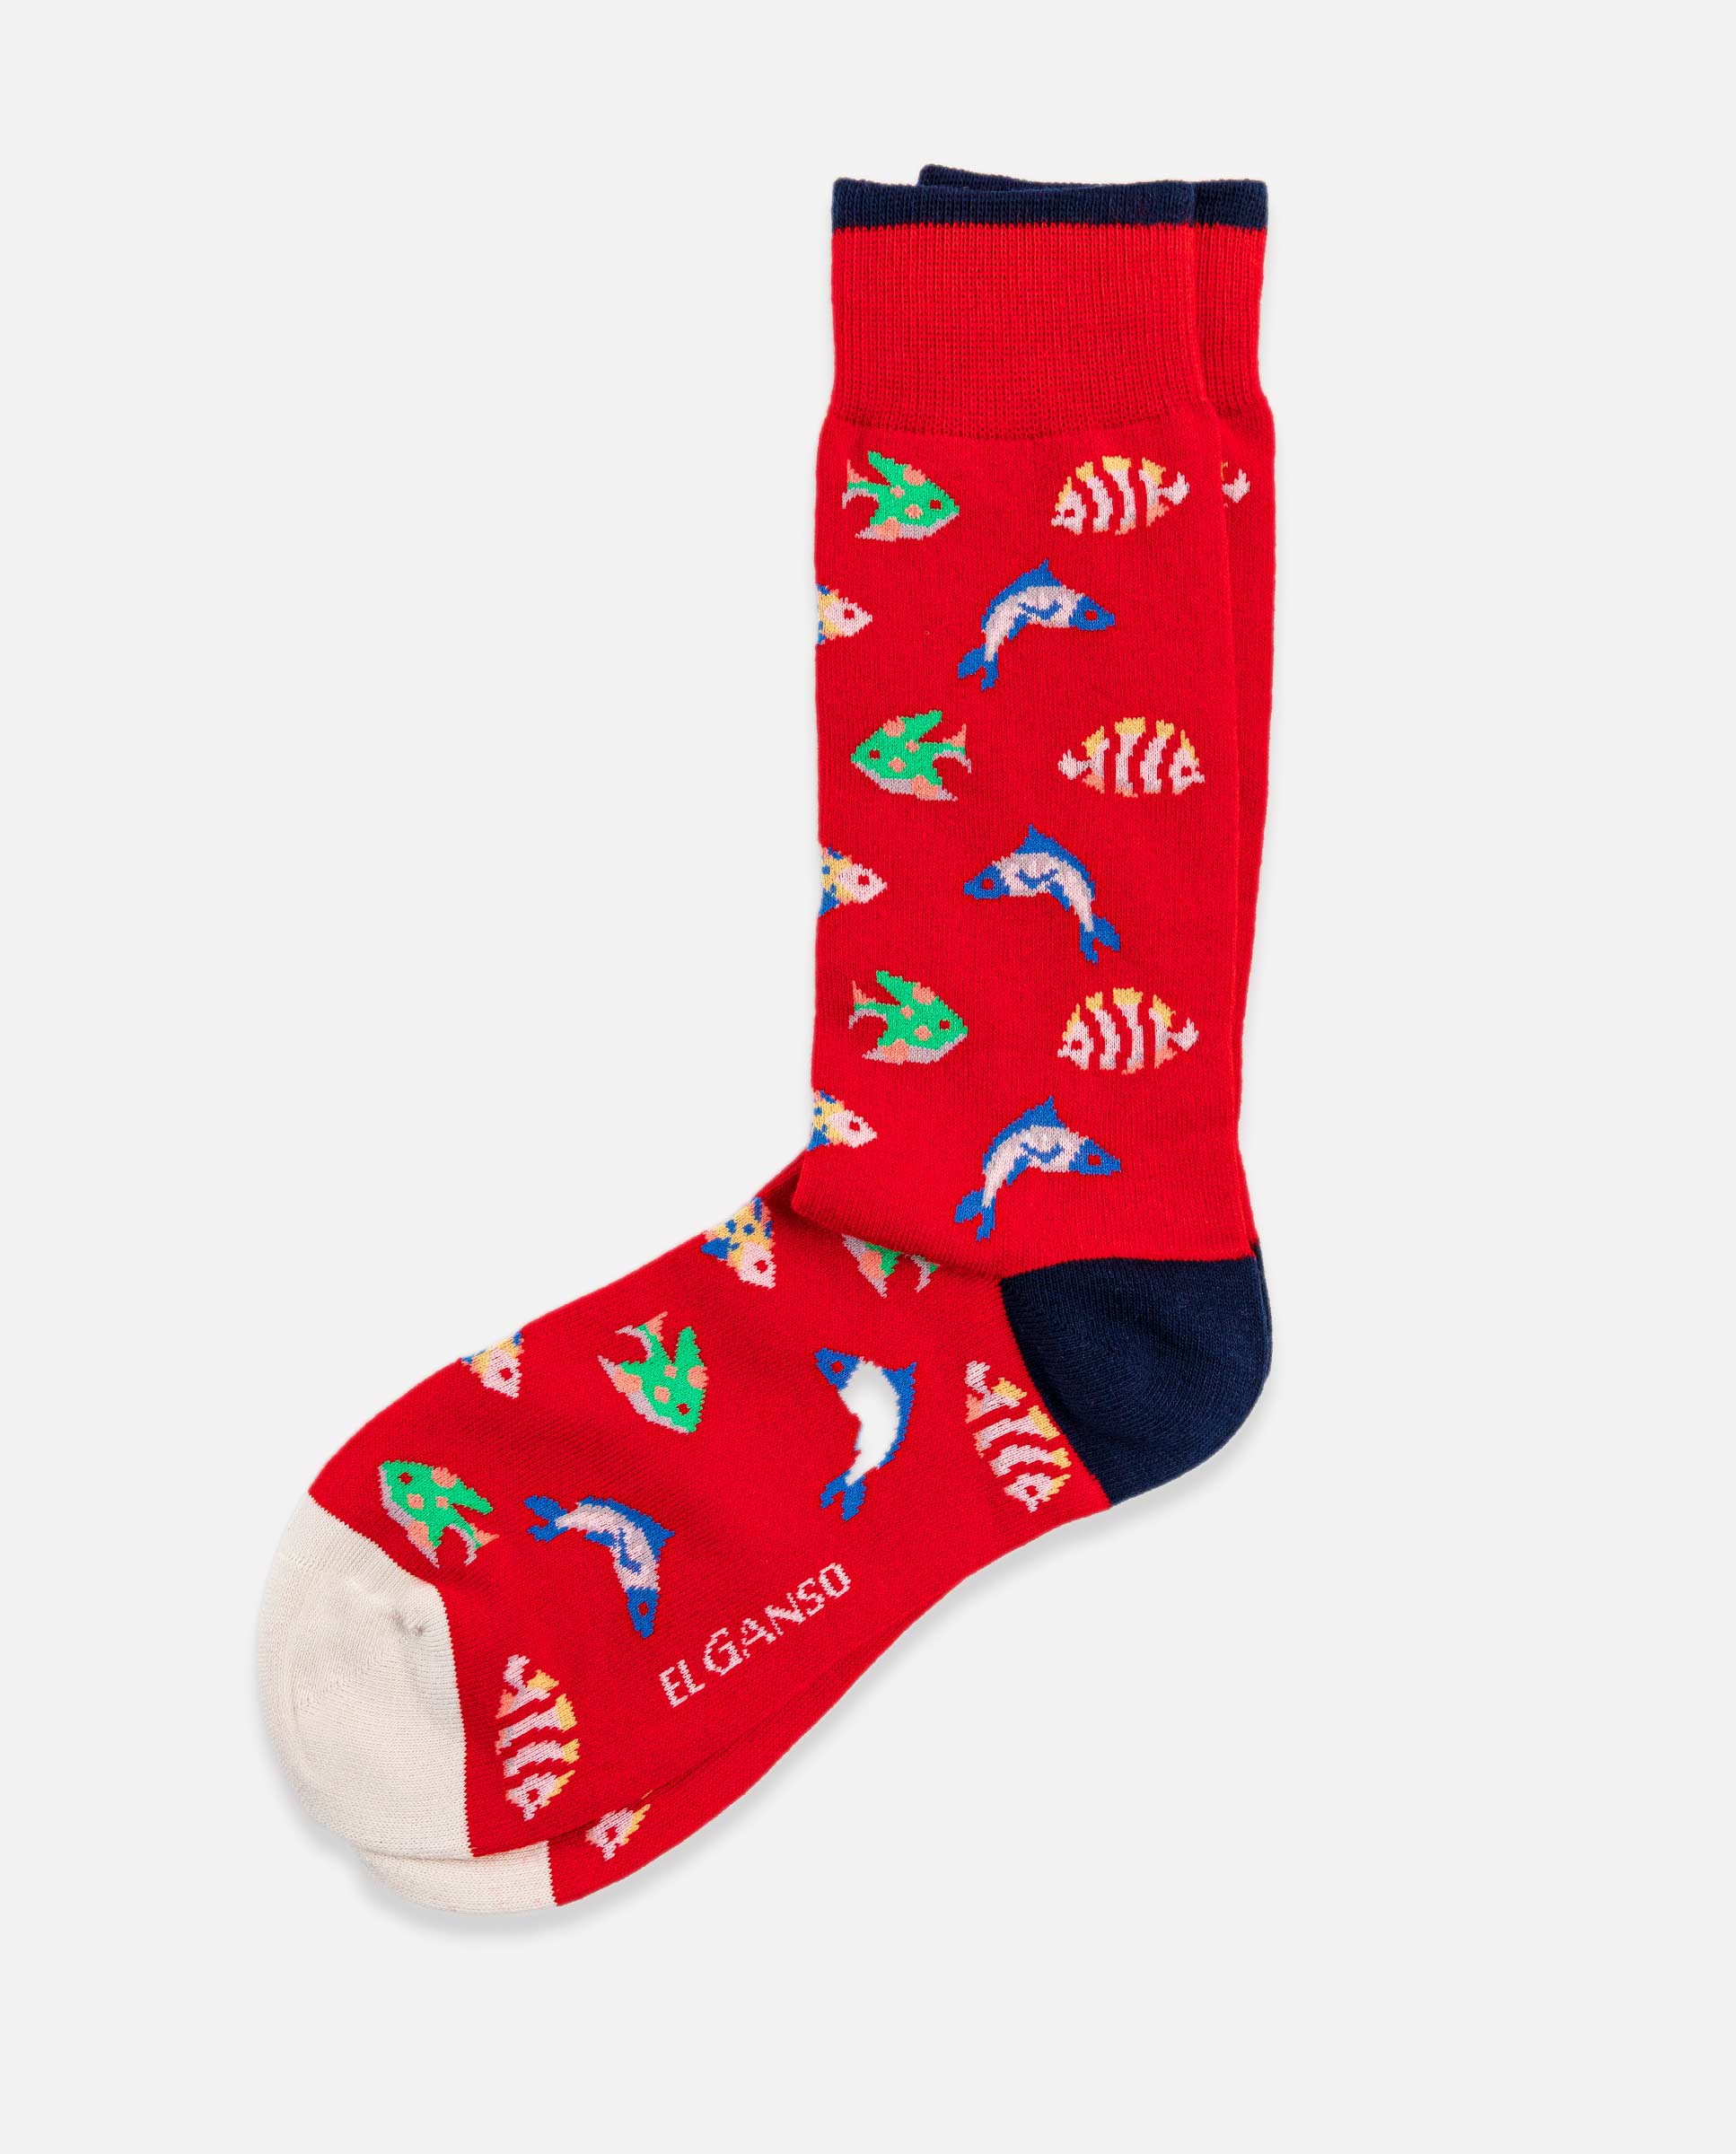 Fish Socks